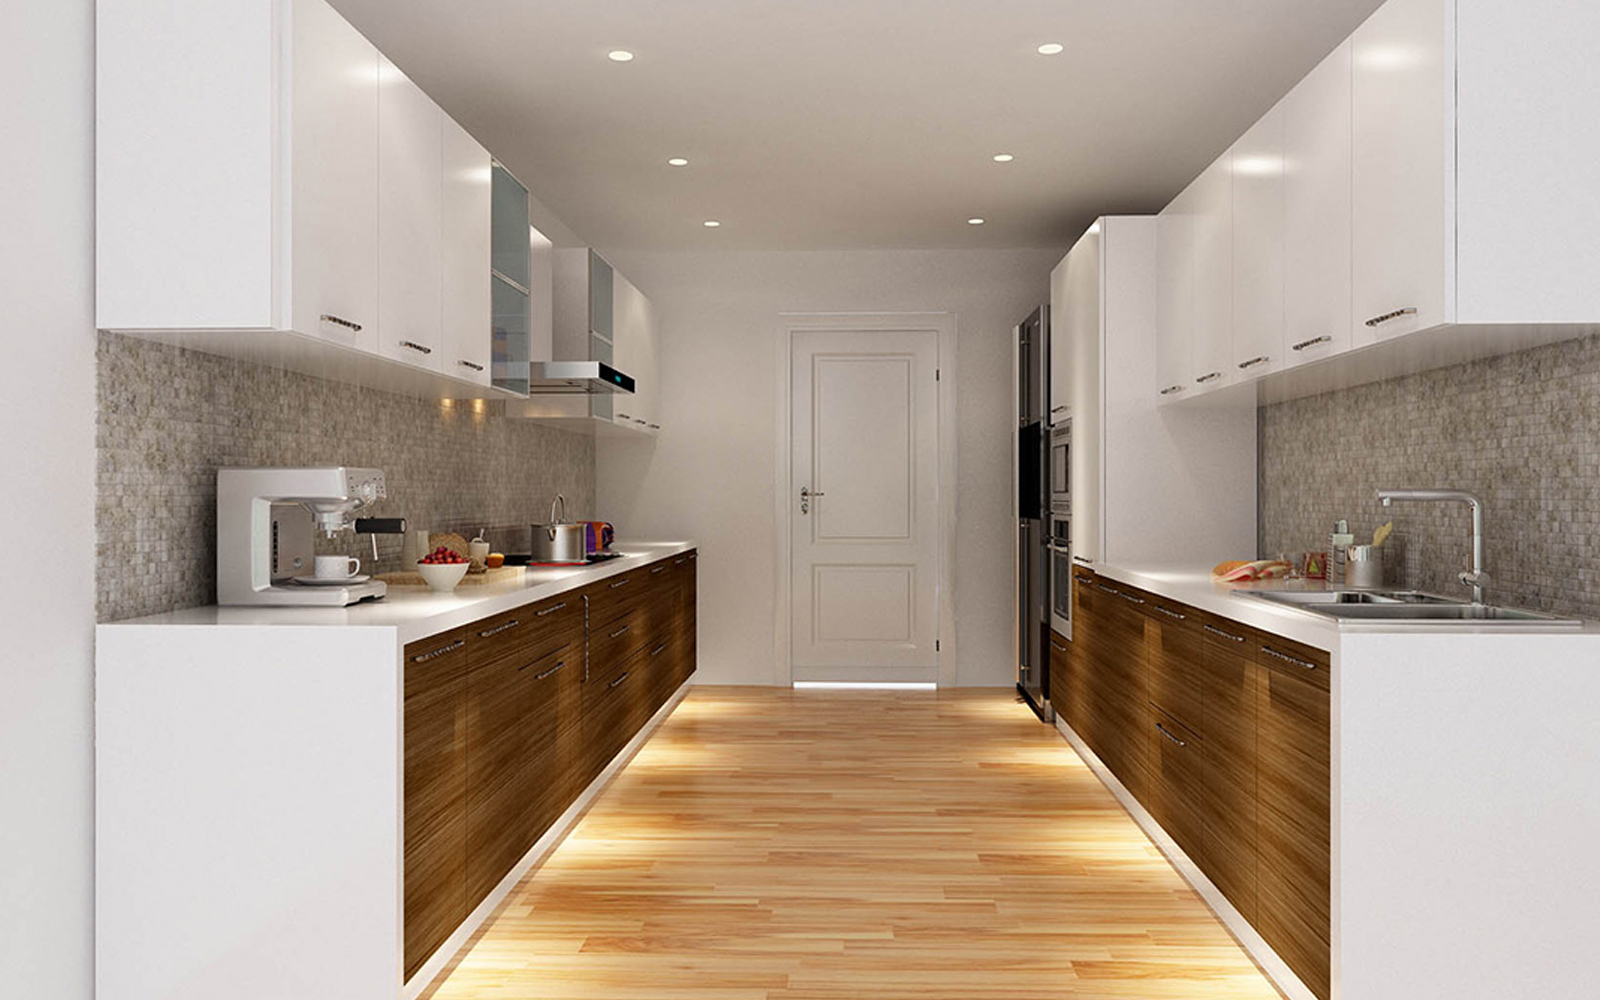 Parallel modular kitchen